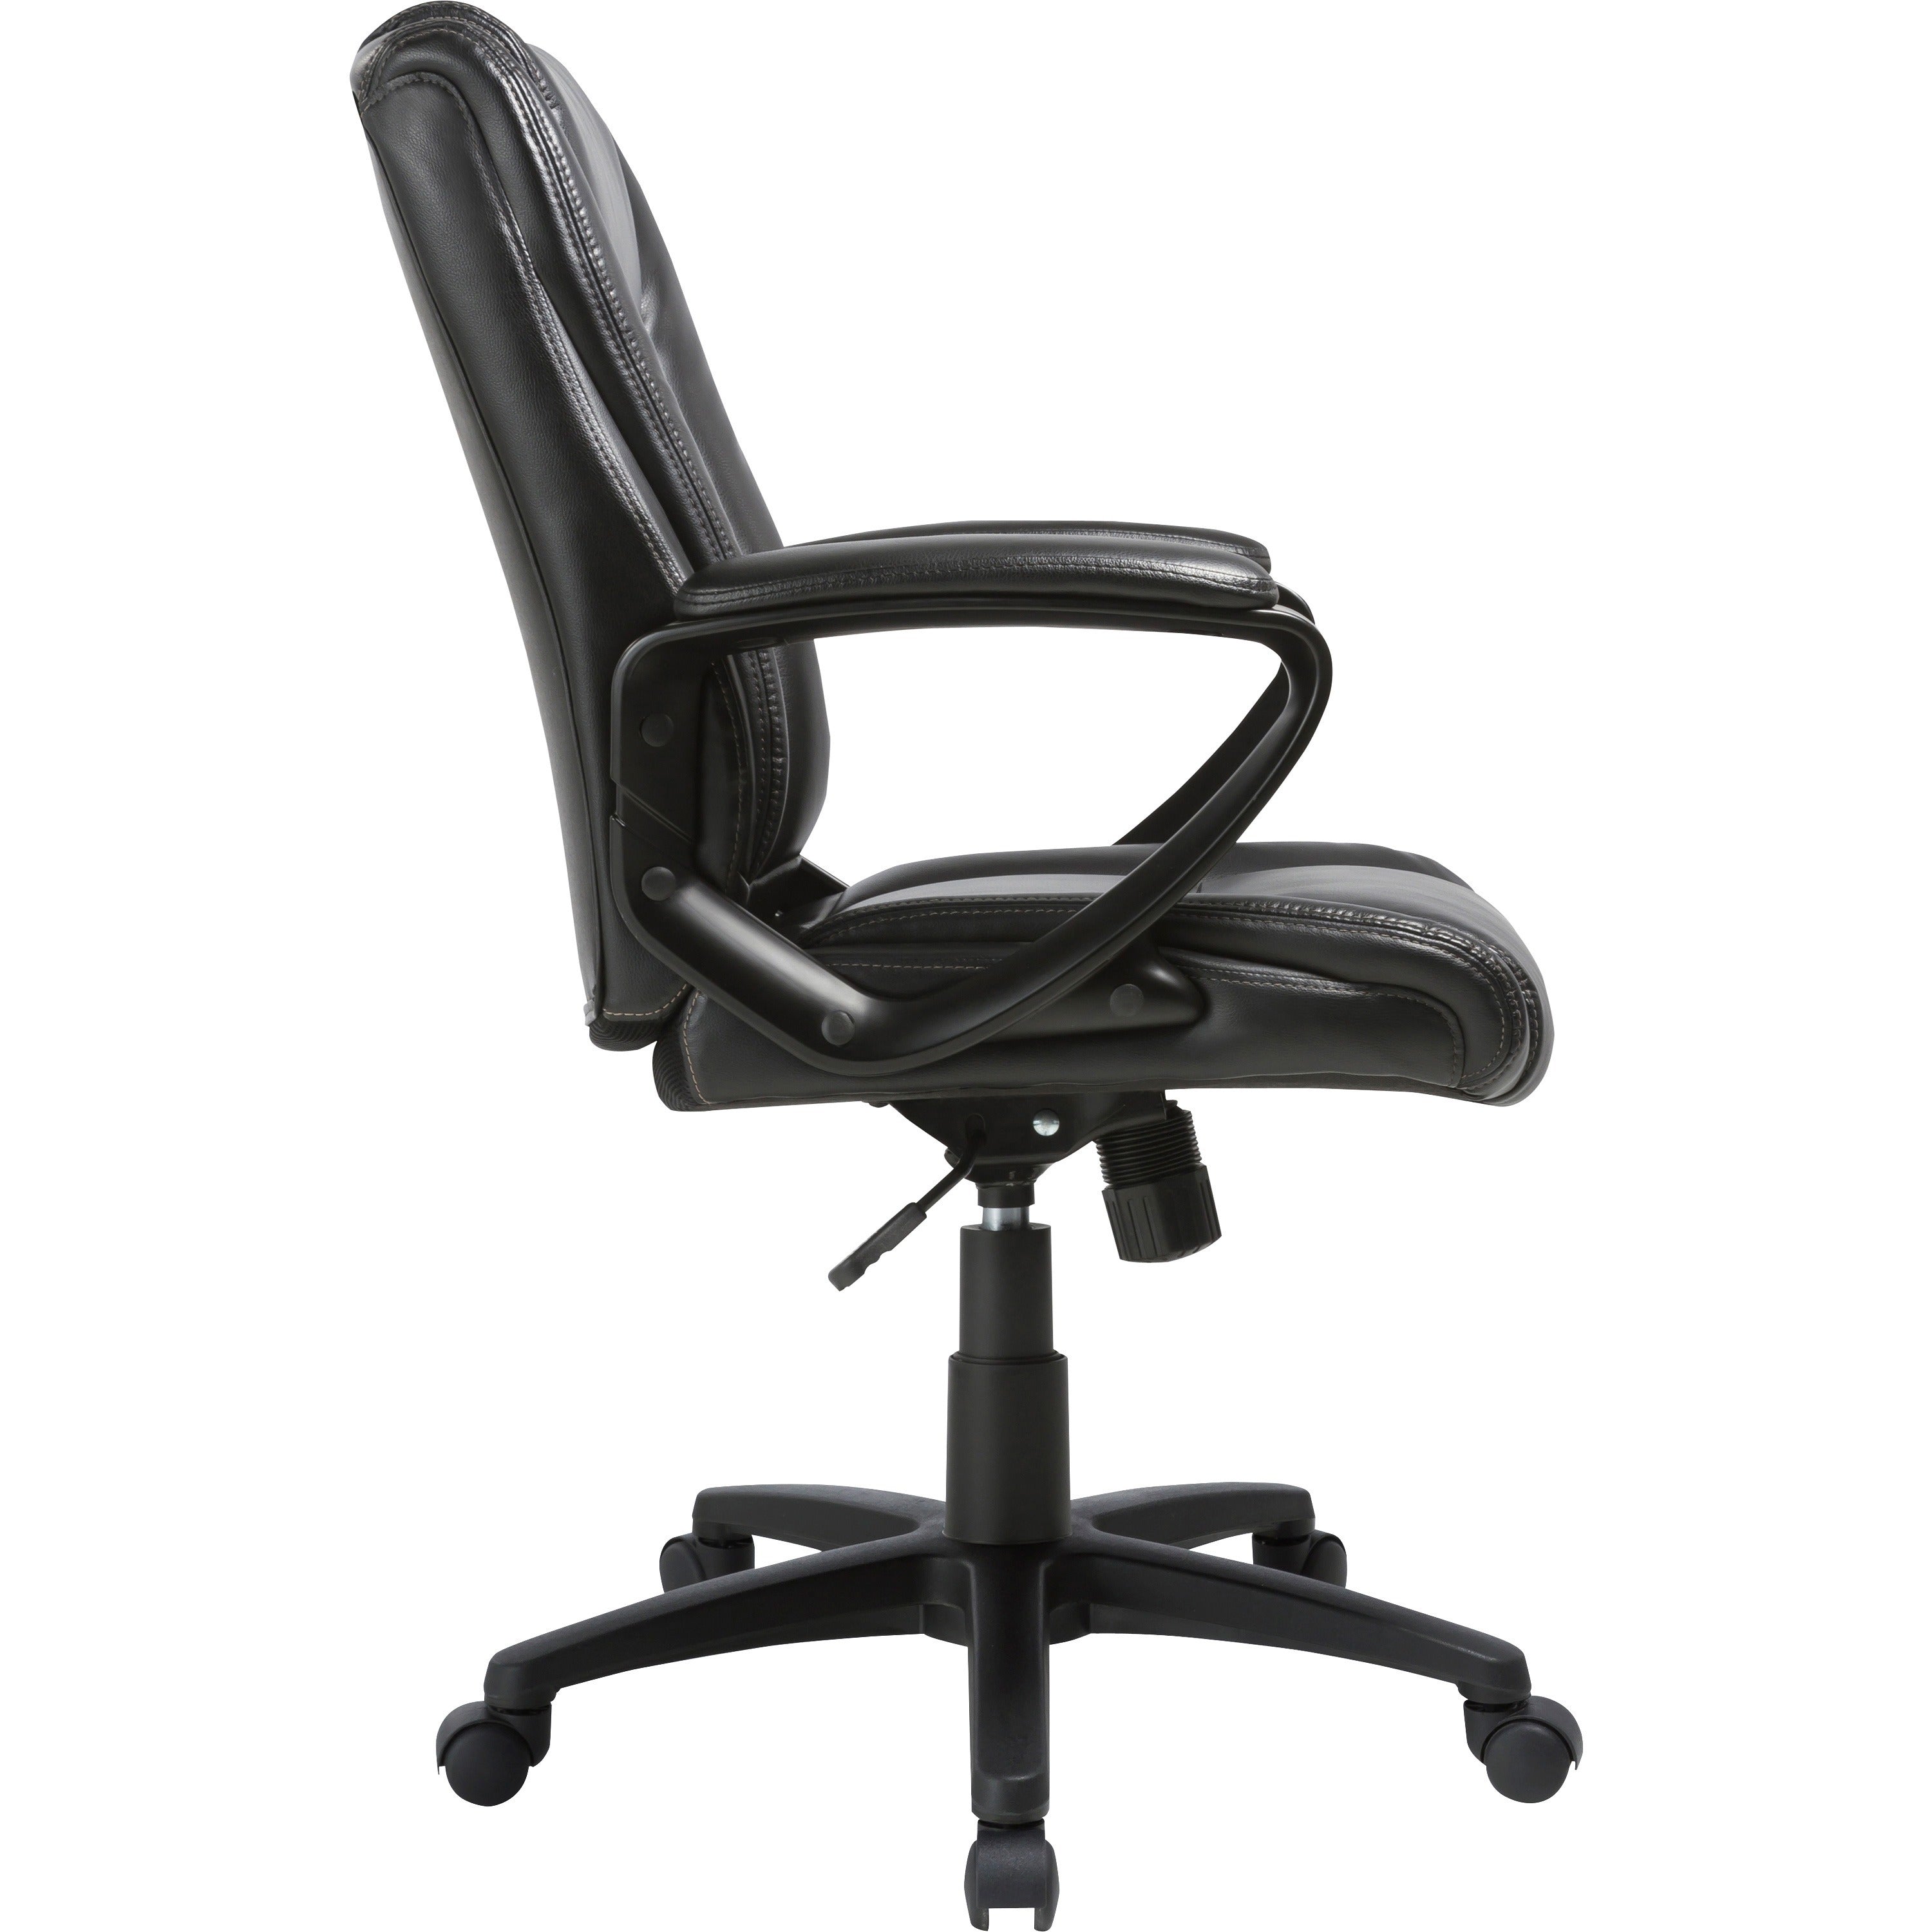 soho-igh-back-office-chair-black-bonded-leather-seat-black-bonded-leather-back-high-back-5-star-base-1-each_llr81801 - 4